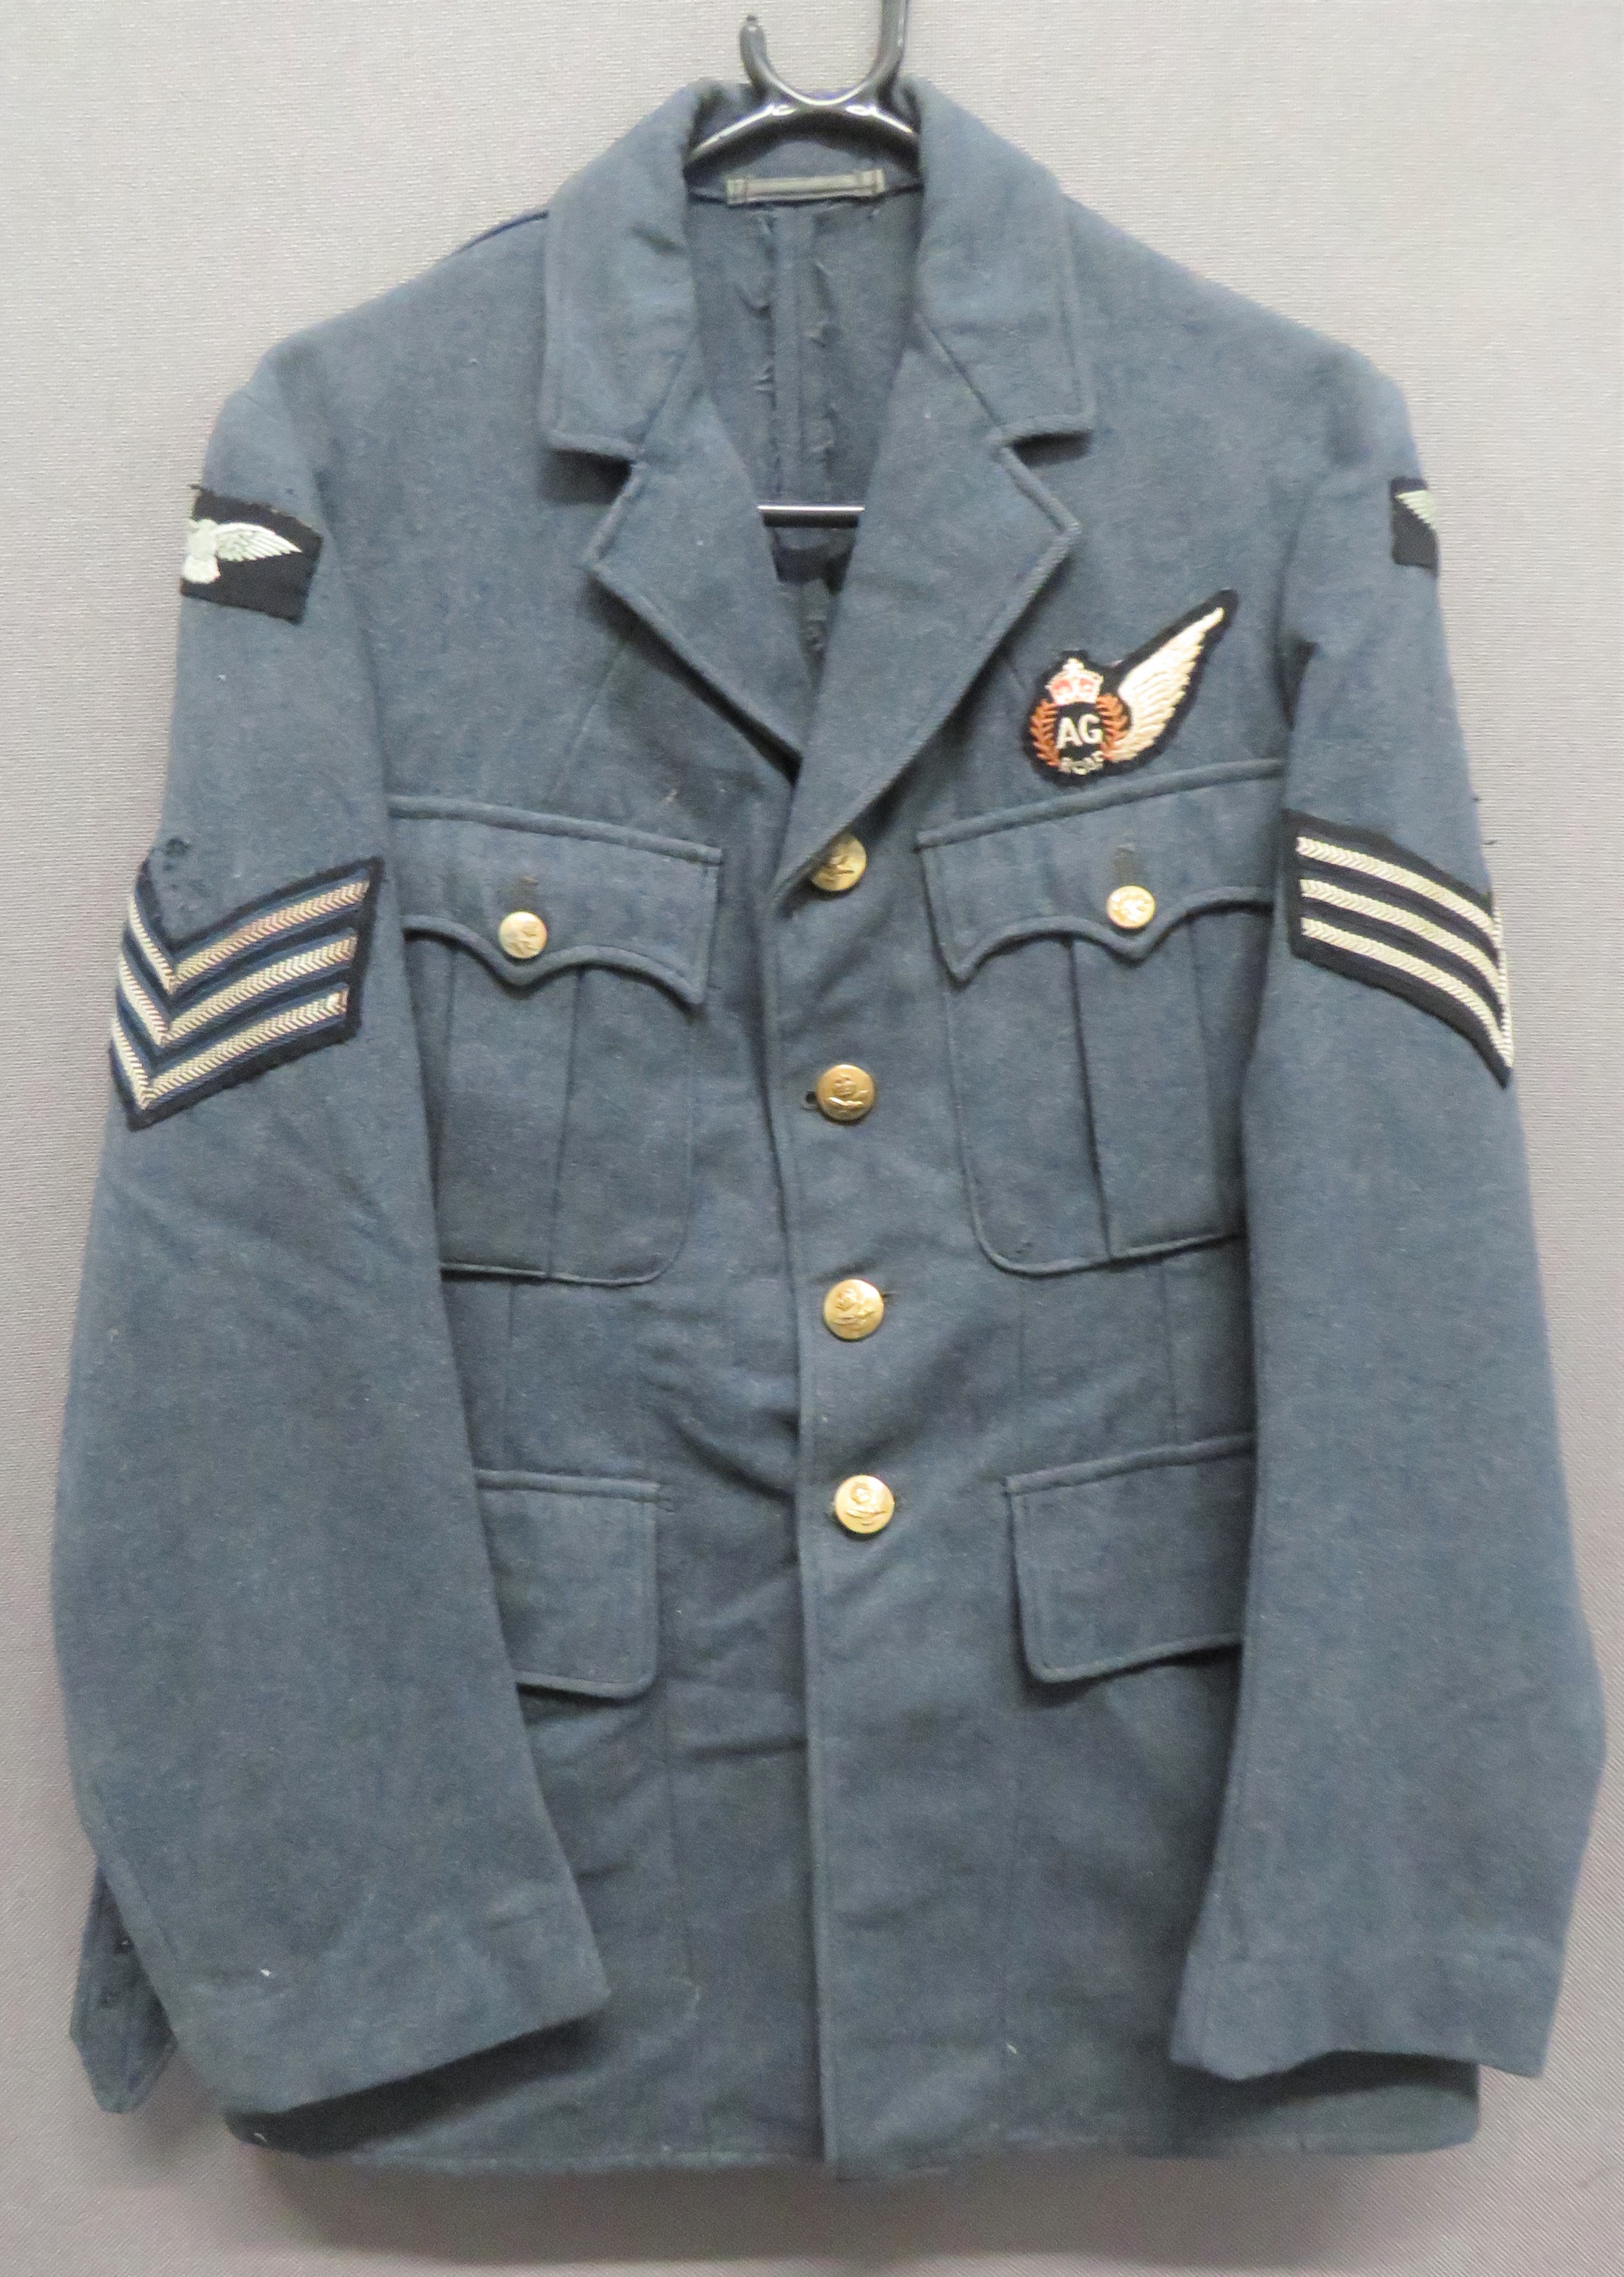 WW2 RCAF Sergeant Air Gunner's Service Dress Tunic blue grey woollen, single breasted, open collar